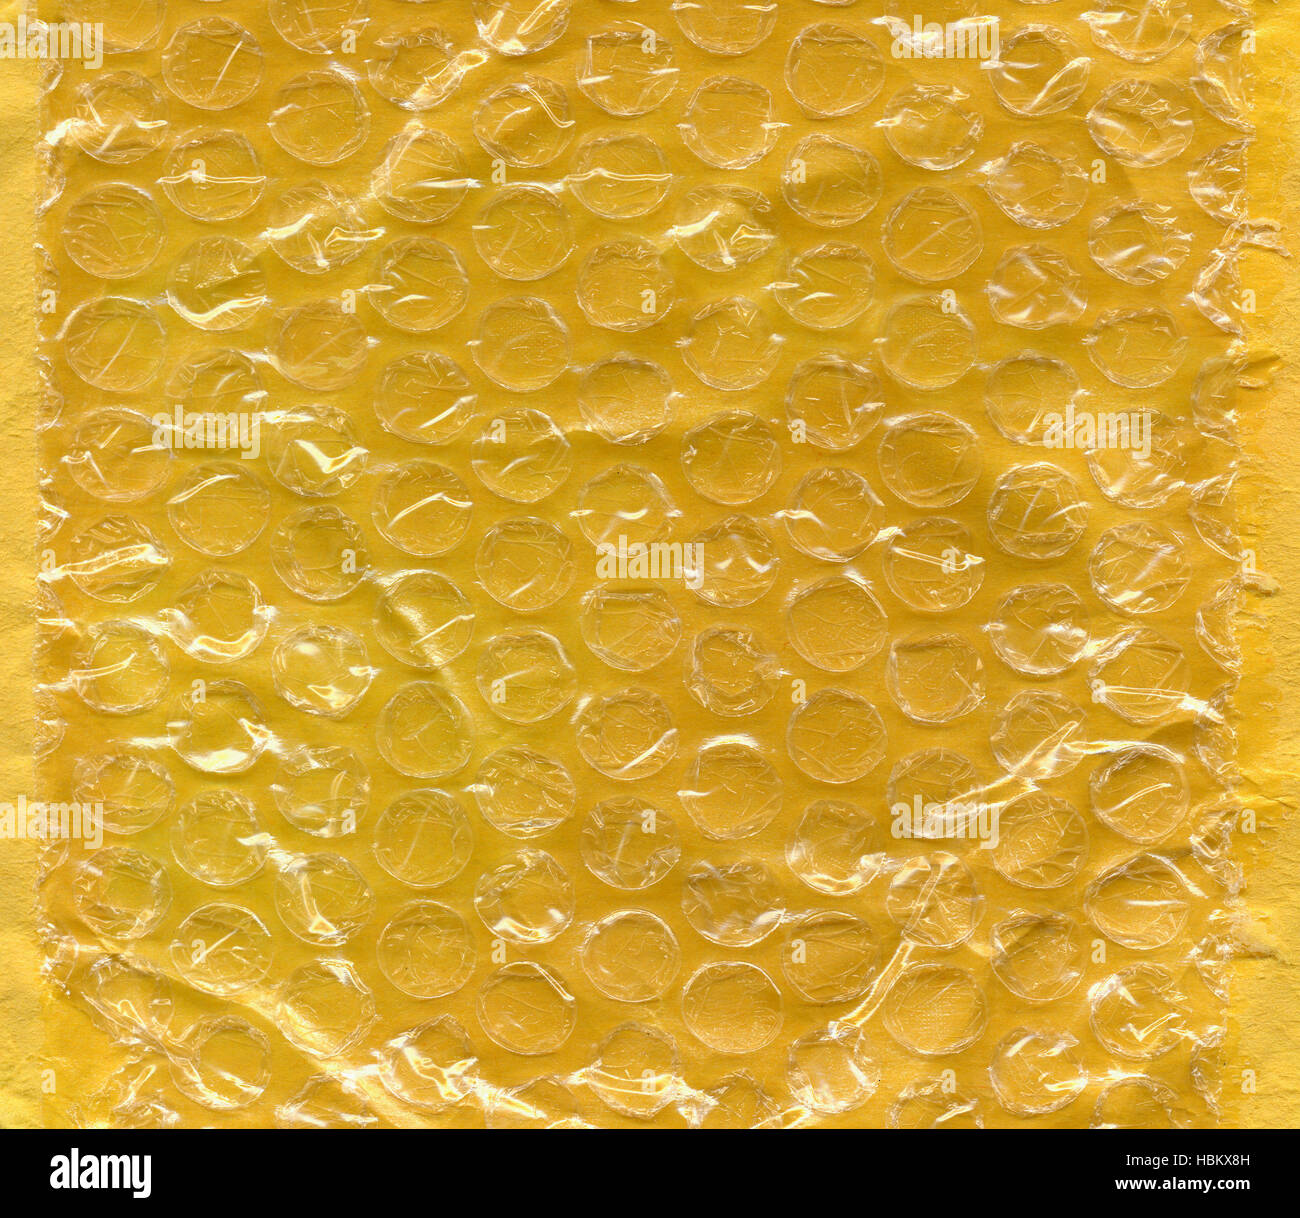 Yellow bubble wrap texture background Stock Photo: 127671505 - Alamy